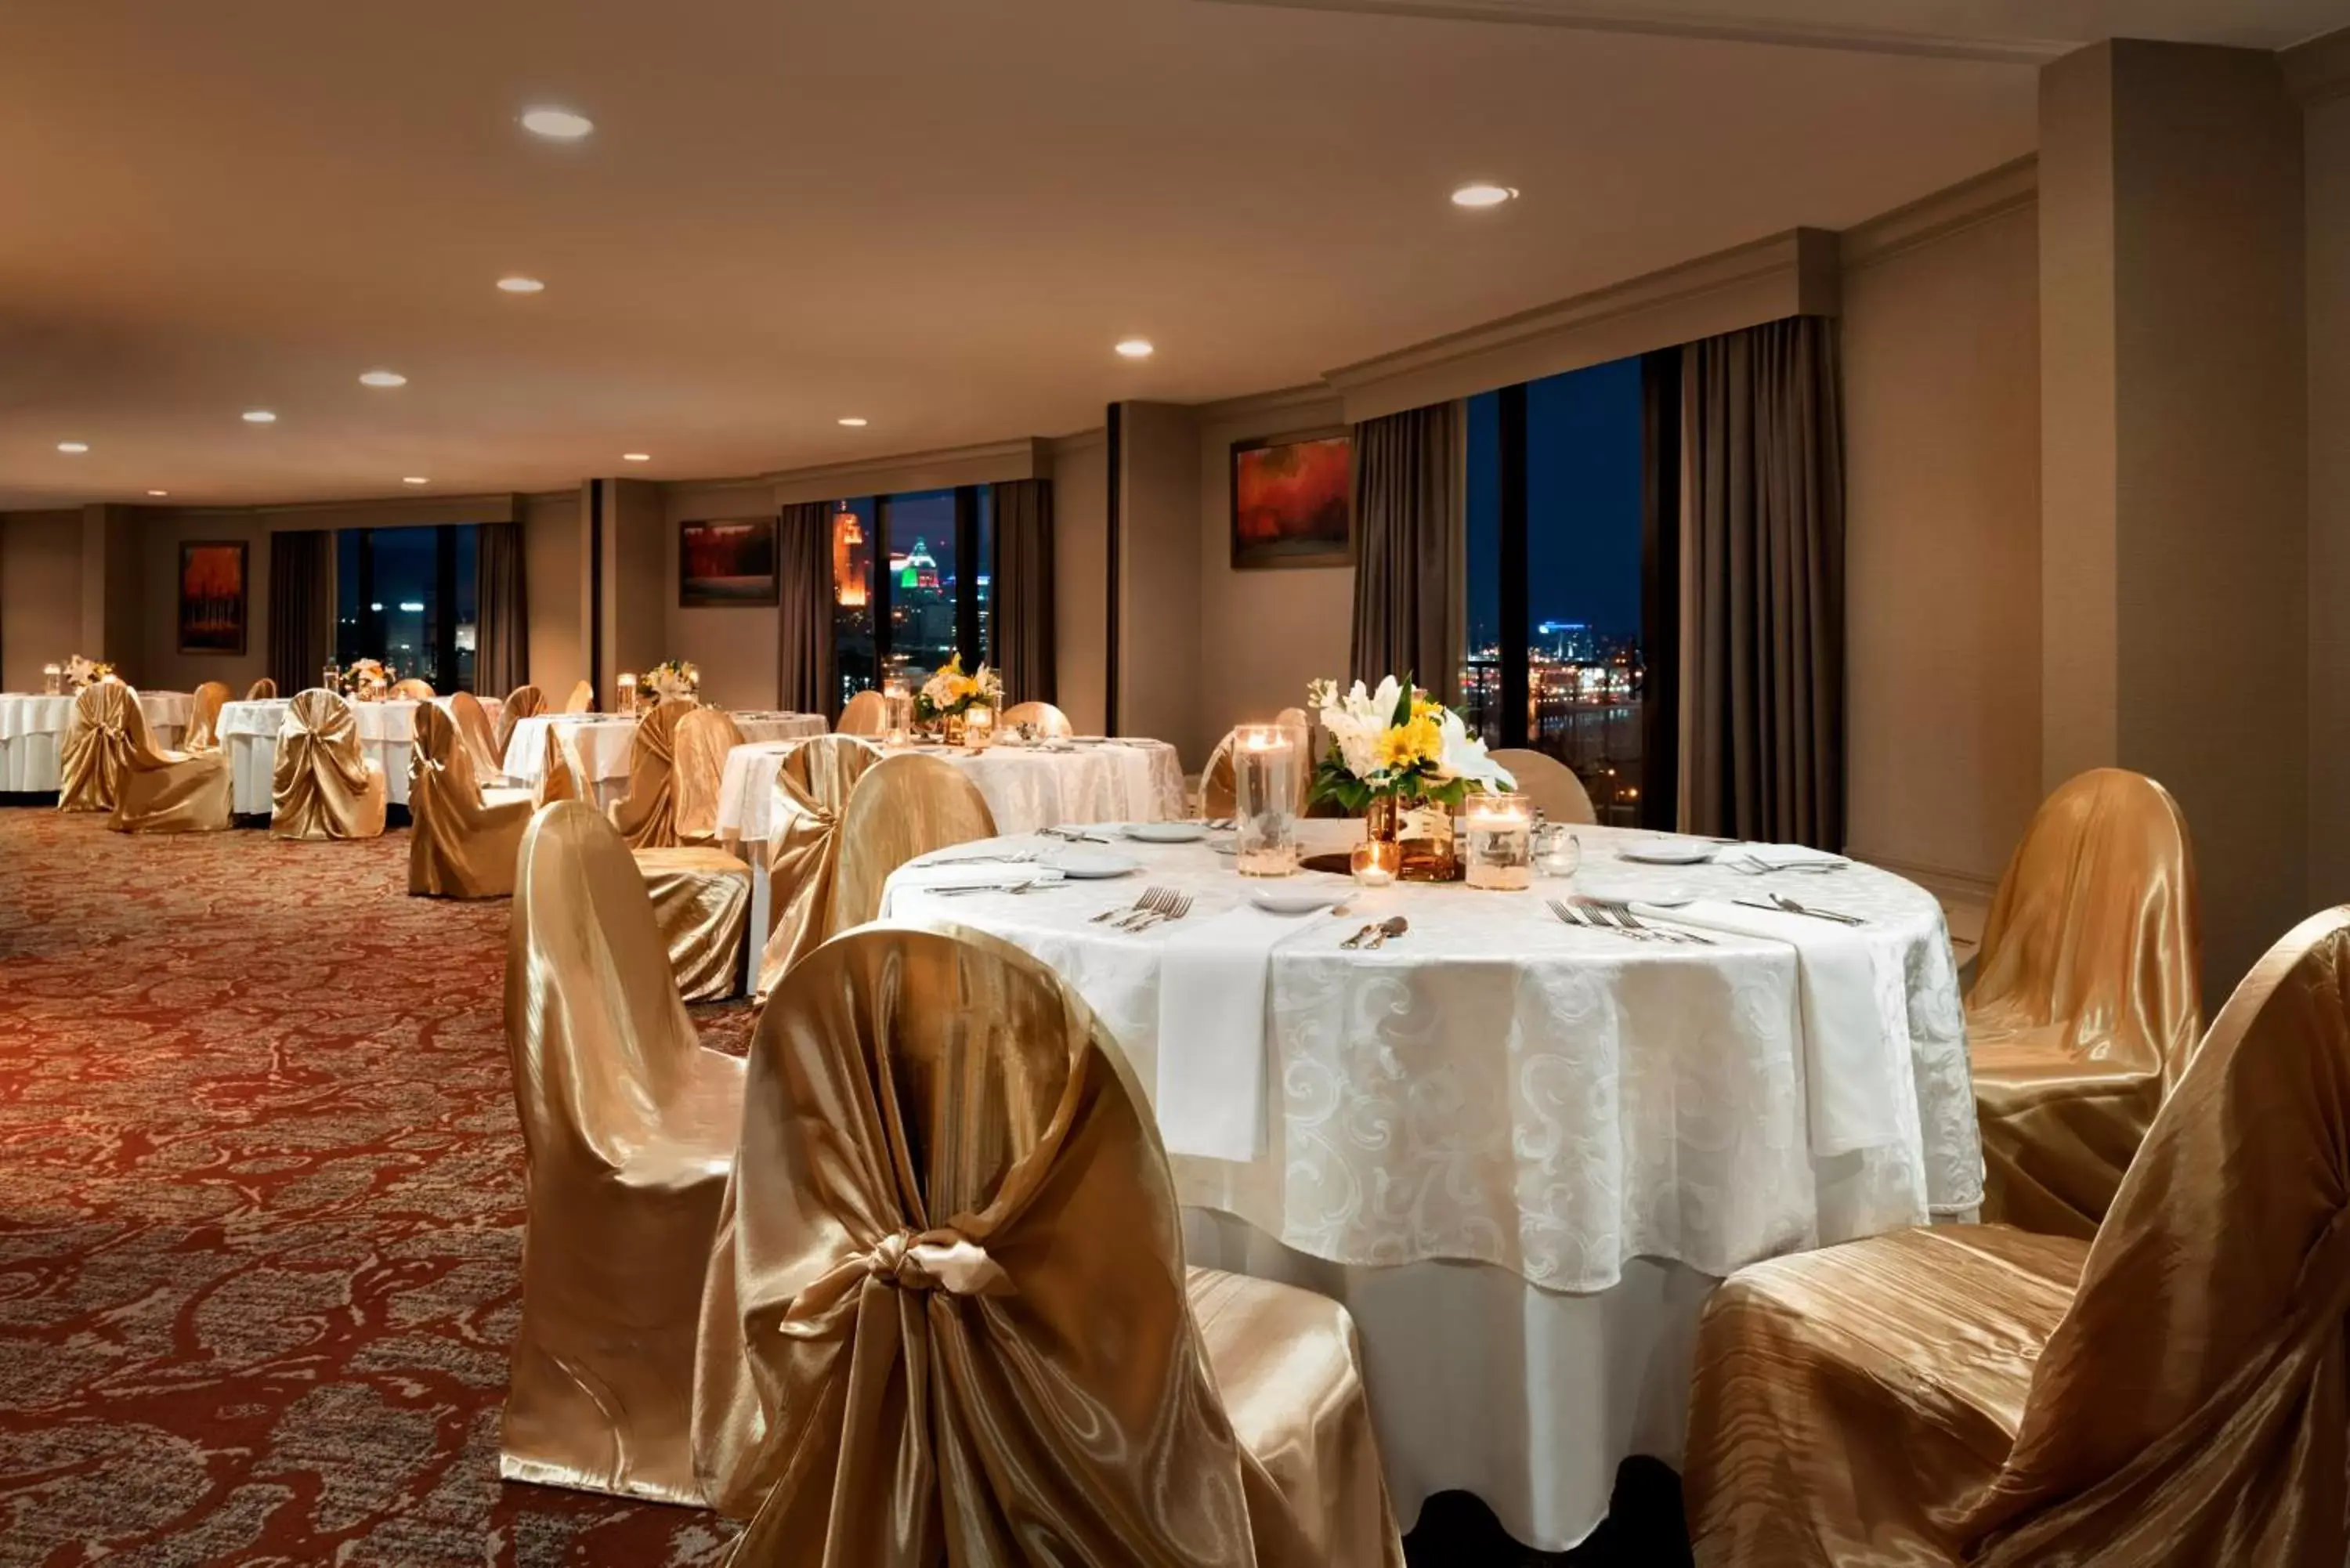 Banquet/Function facilities, Banquet Facilities in Radisson Hotel Cincinnati Riverfront